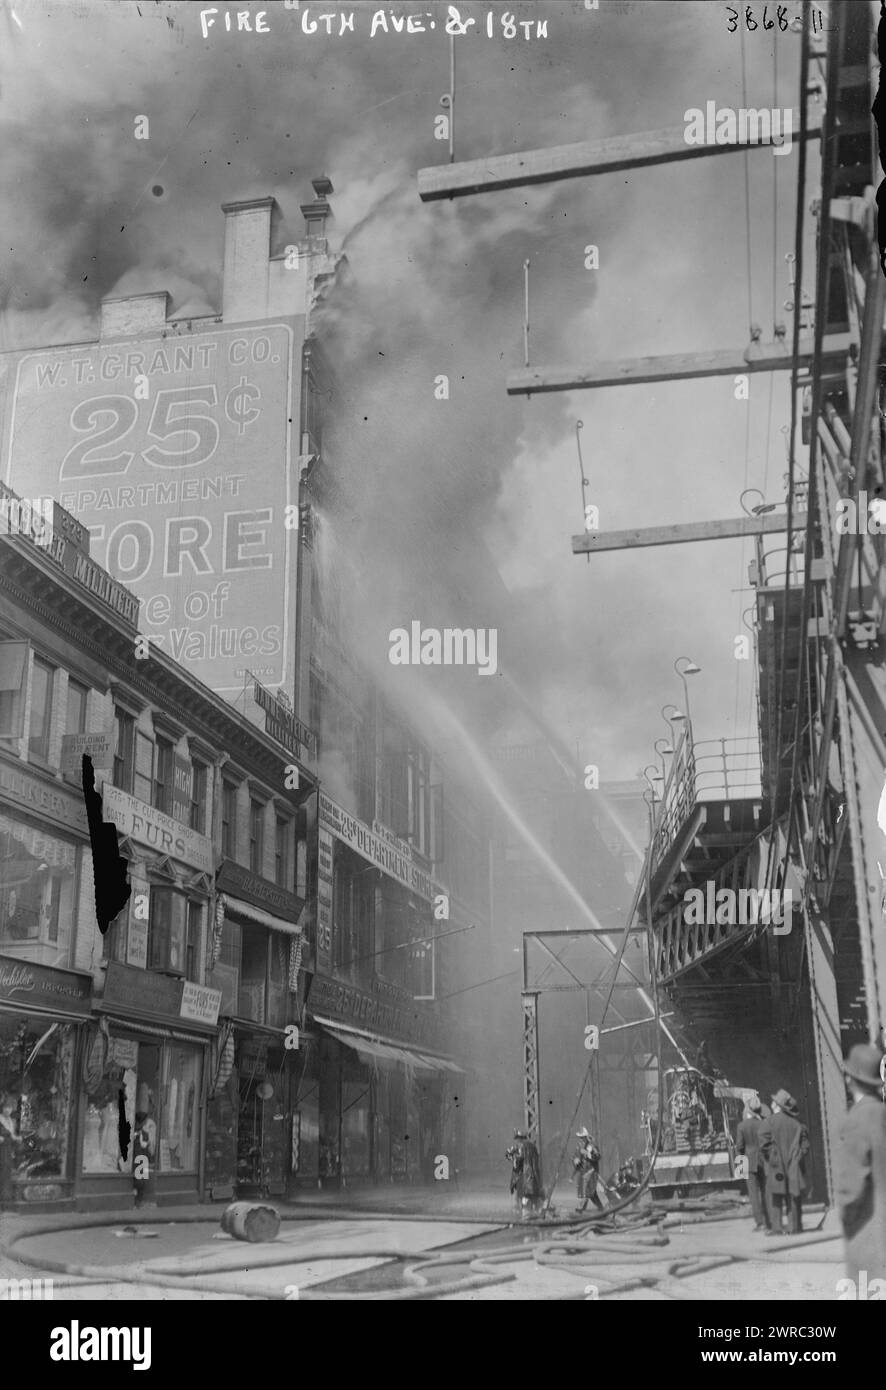 Fire, 6th Ave. & 18th, 1916, 1916, Glass negatives, 1 negative: glass Stock Photo